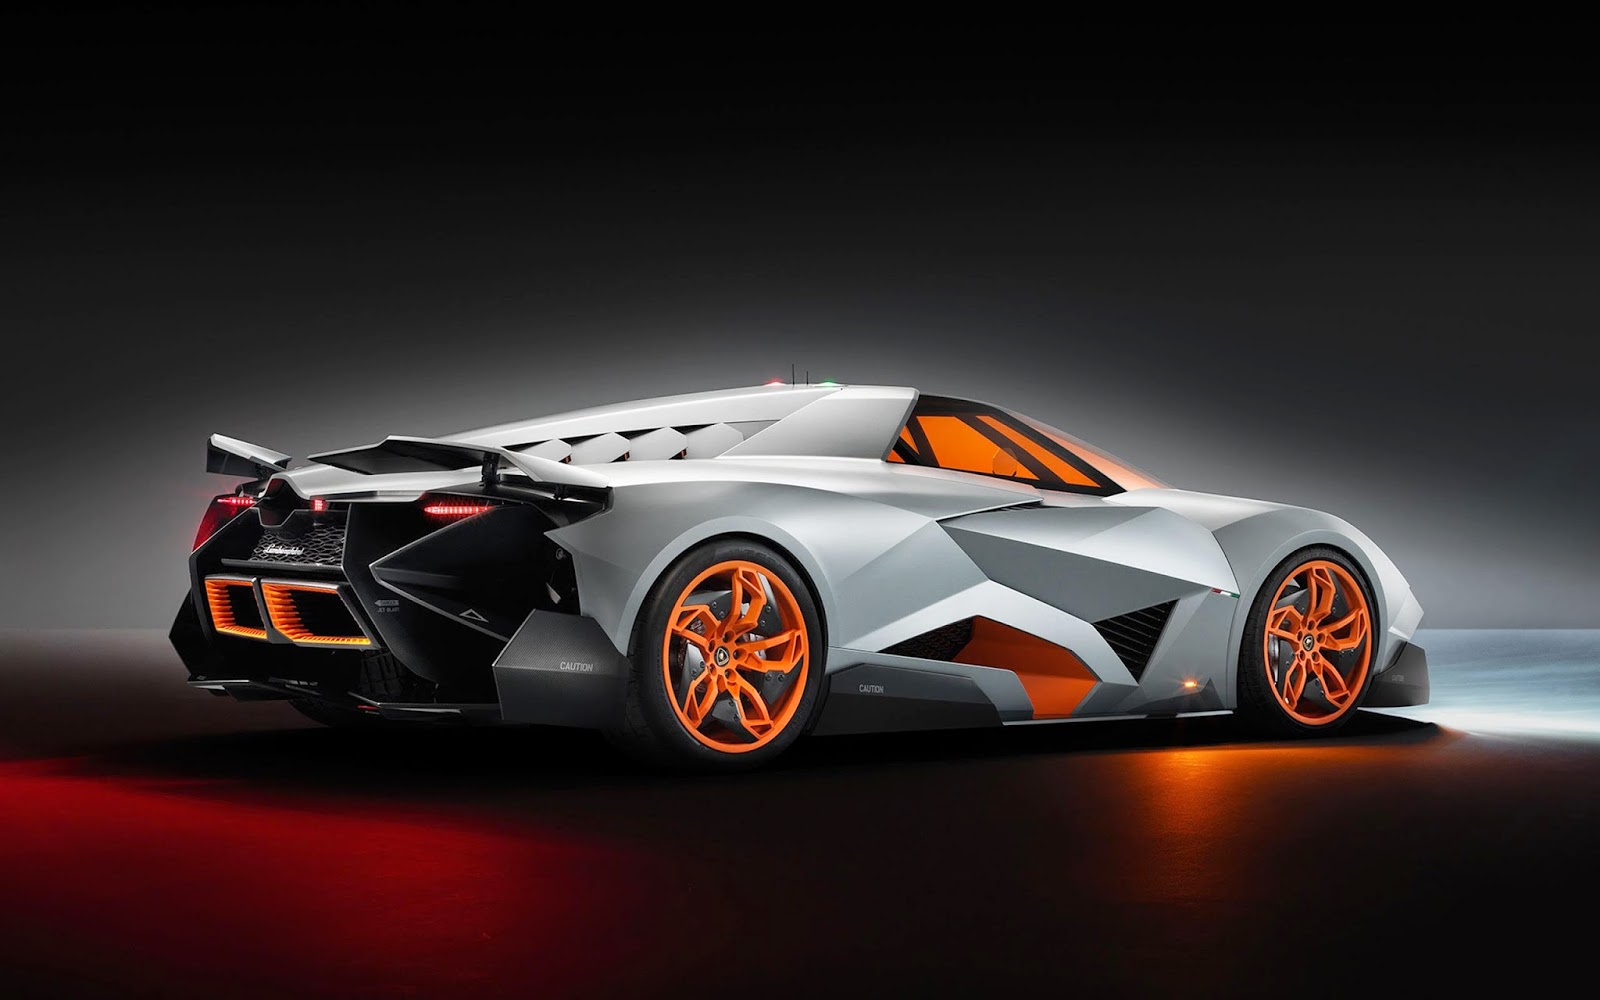 Aneka Modifikasi Kumpulan Foto Mobil Lamborghini Super Keren Terbaru